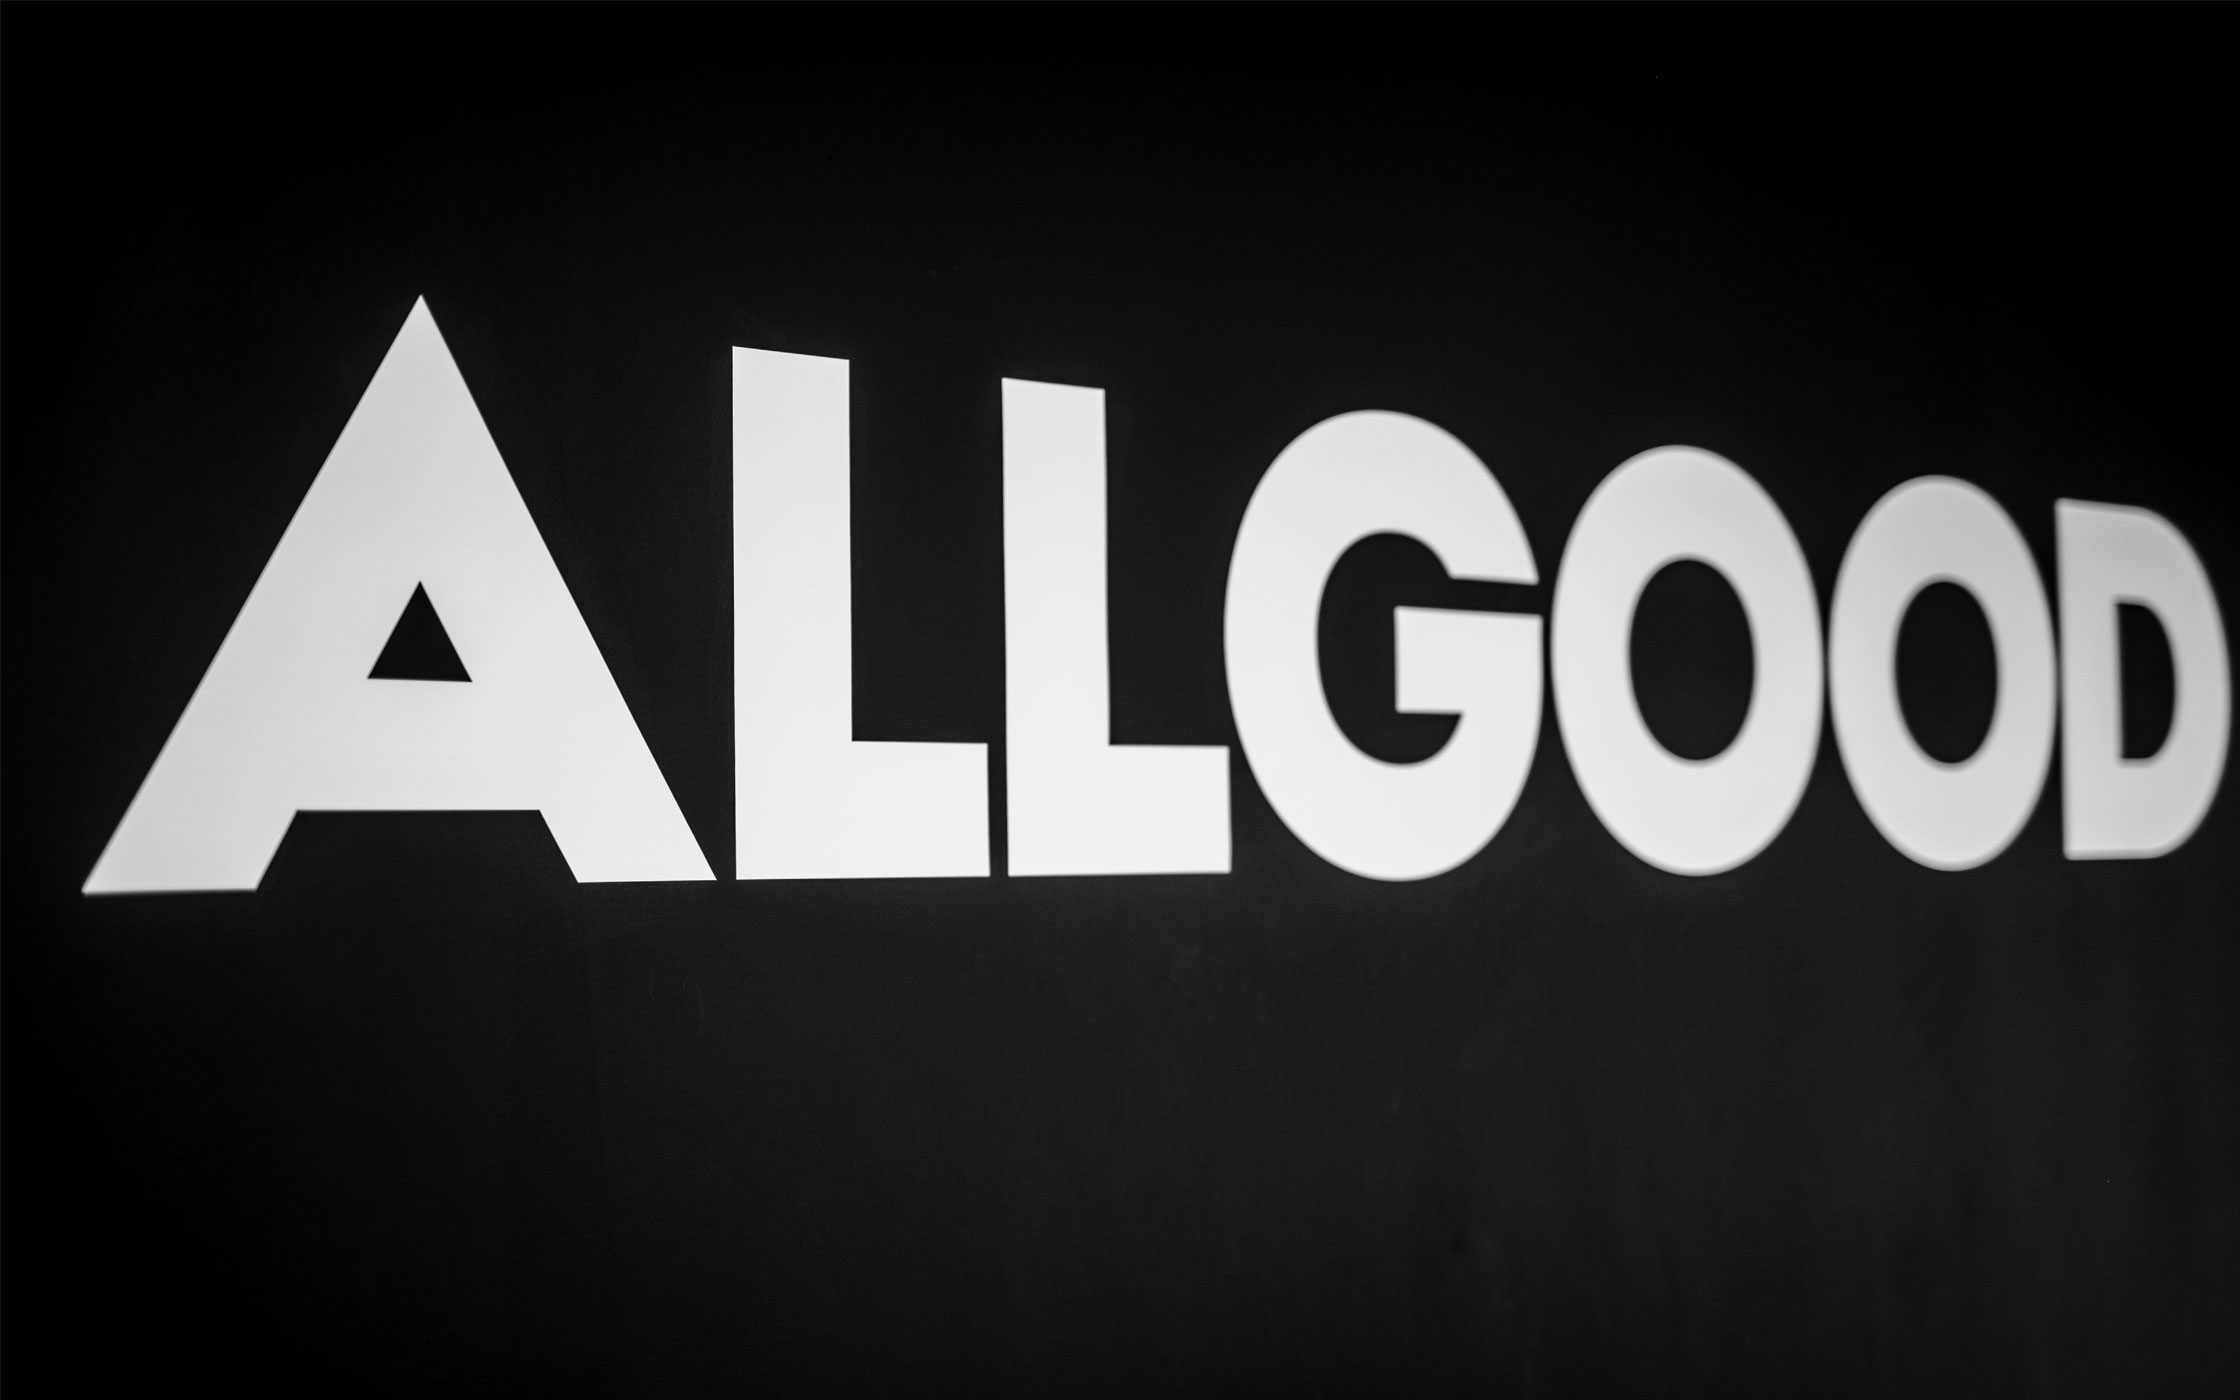 ALLGOOD has rebranded